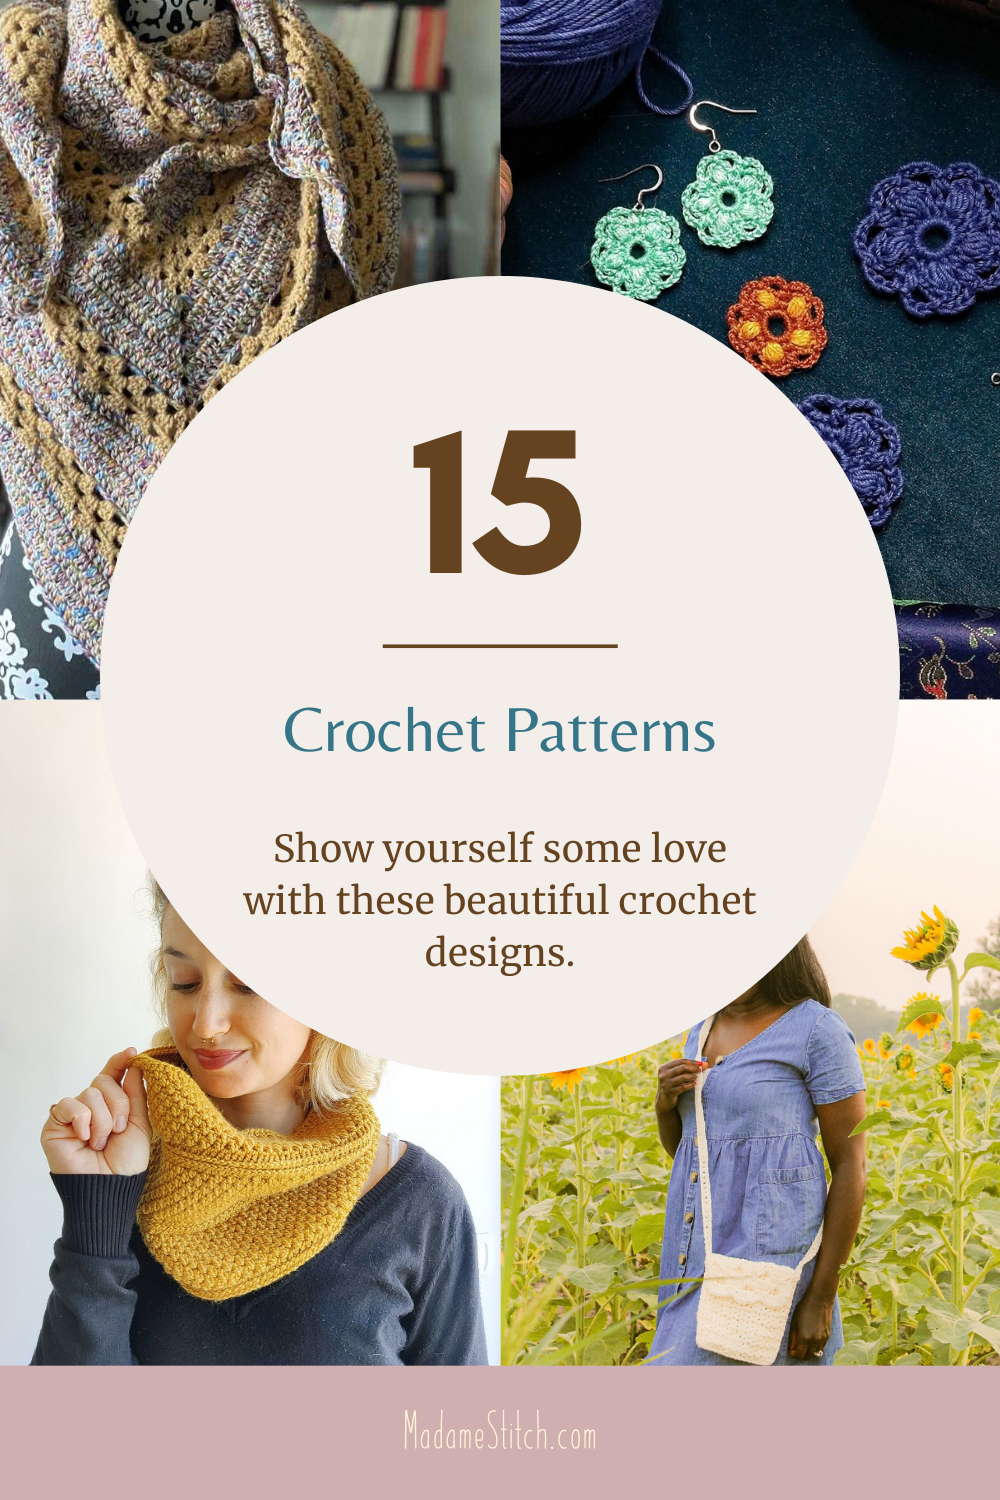 Crochet 4 Me blog hop roundup